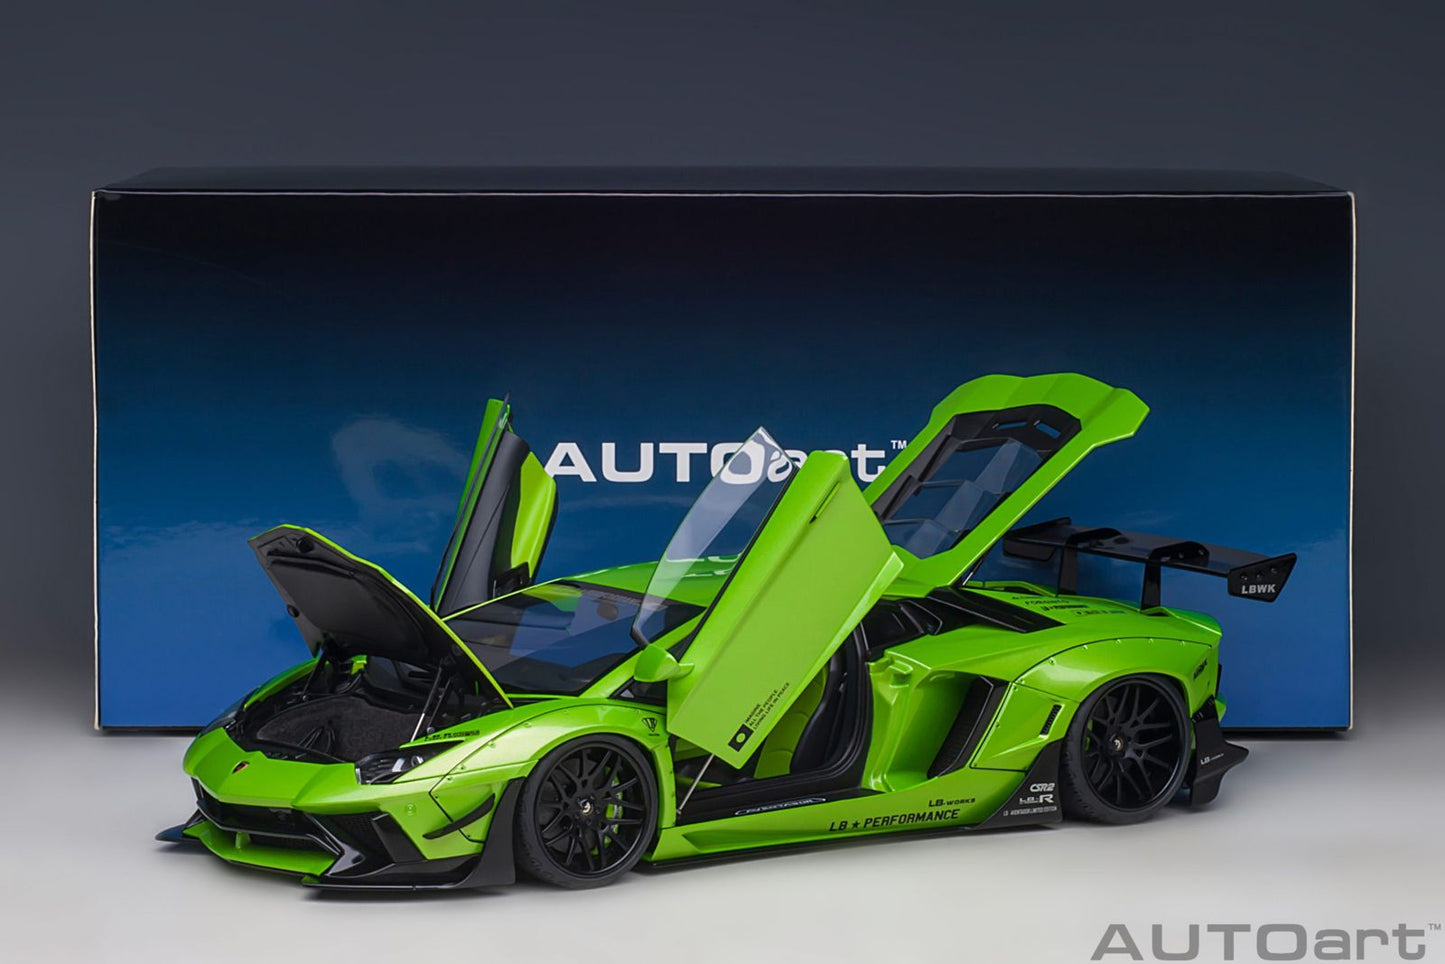 Auto Art 1/18 Lamborghini Aventador LB Works Limited Edition - Lime Green